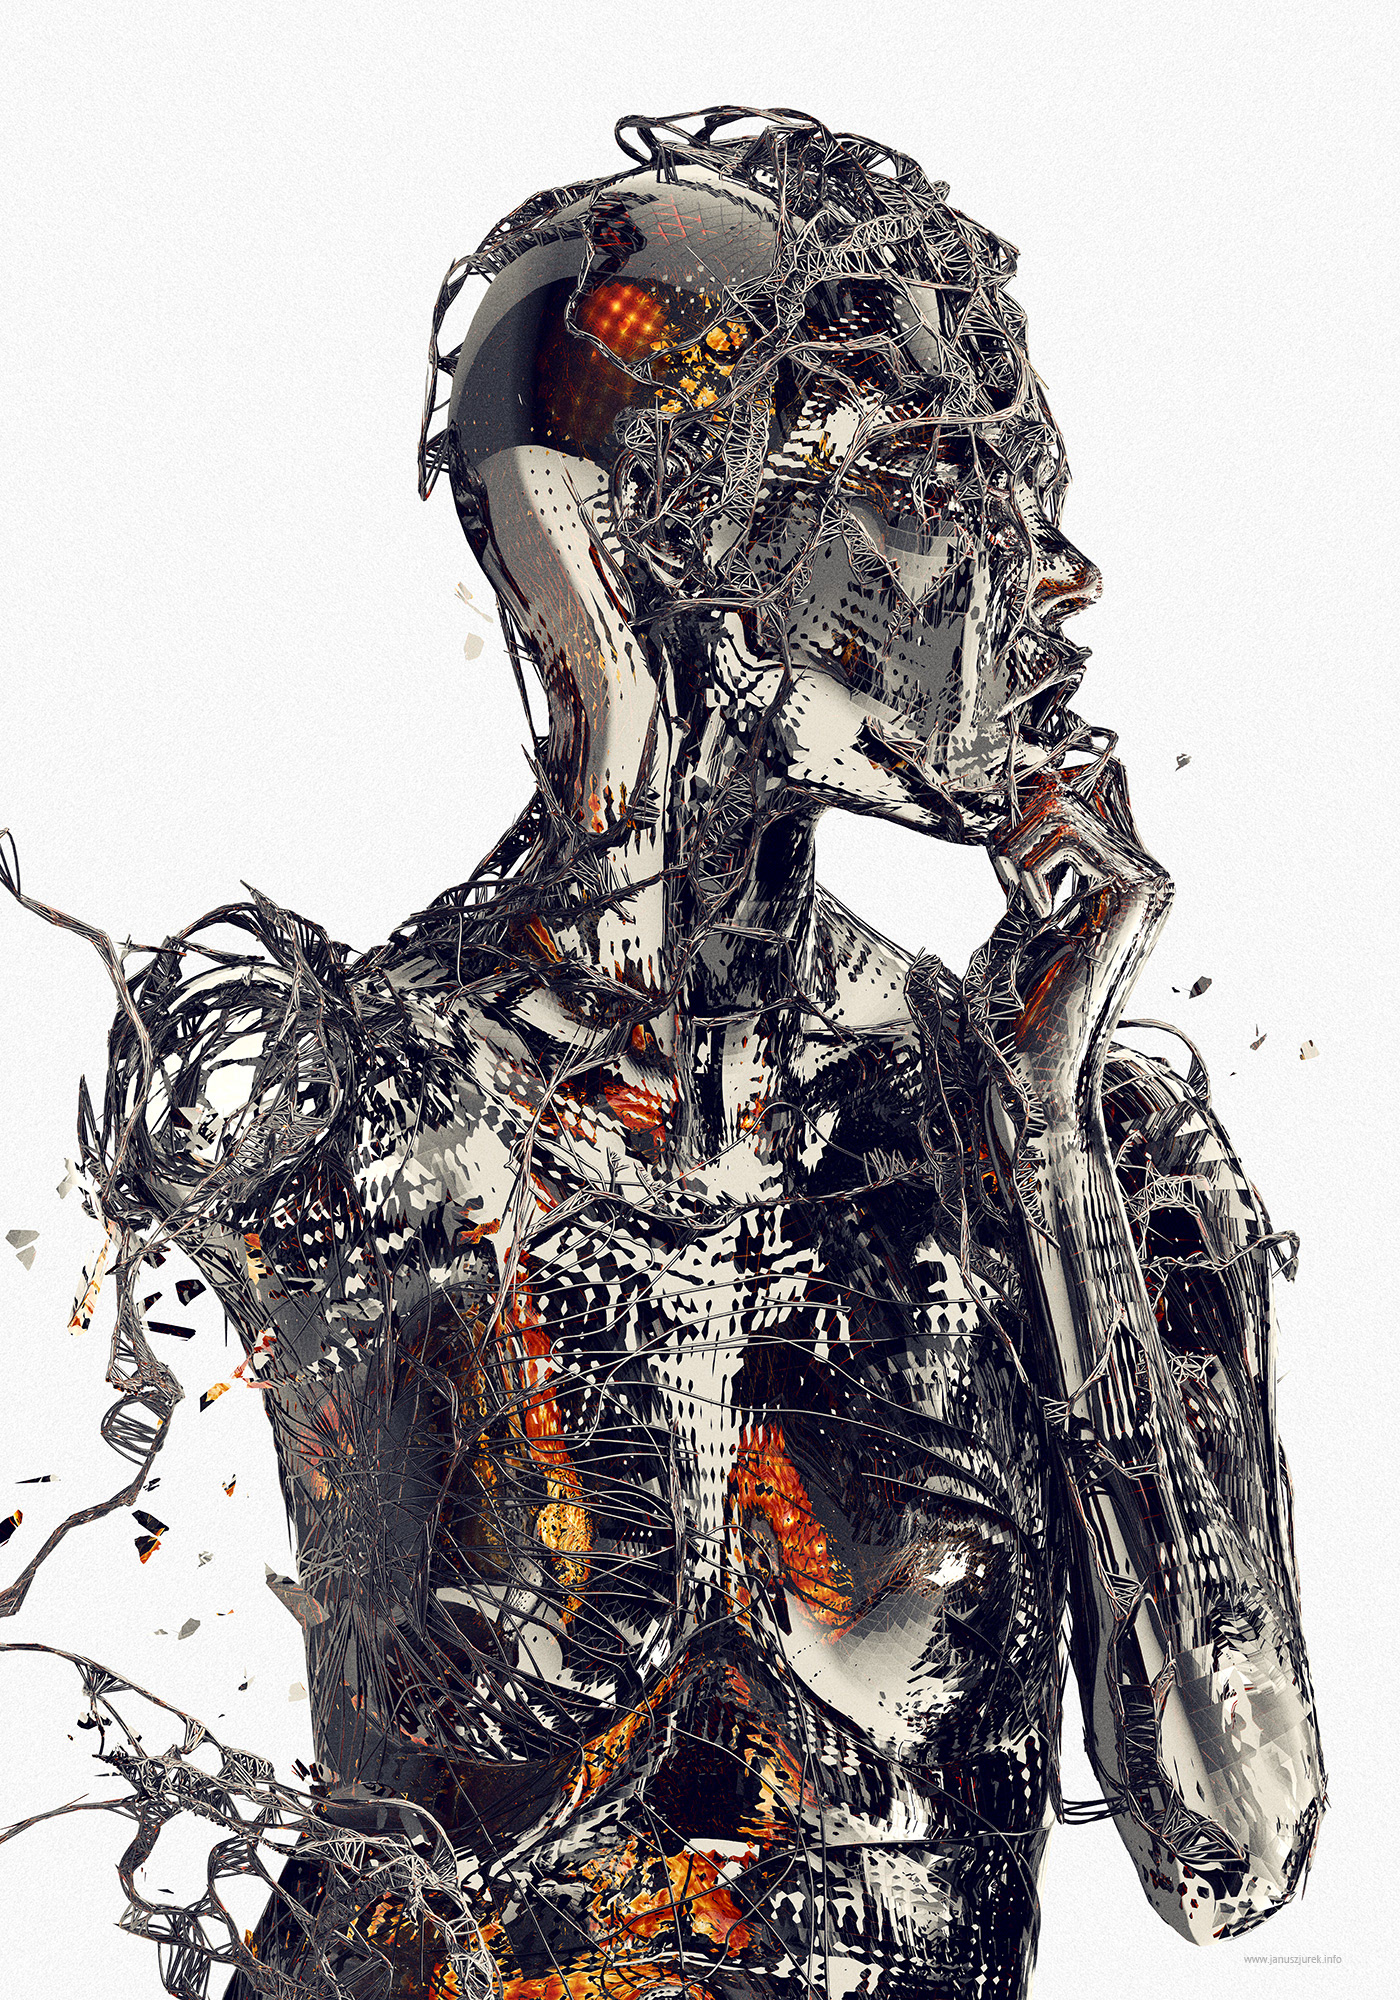 Bionic Cyborg droid futuristic humanoid robot genetics science medicine cyber